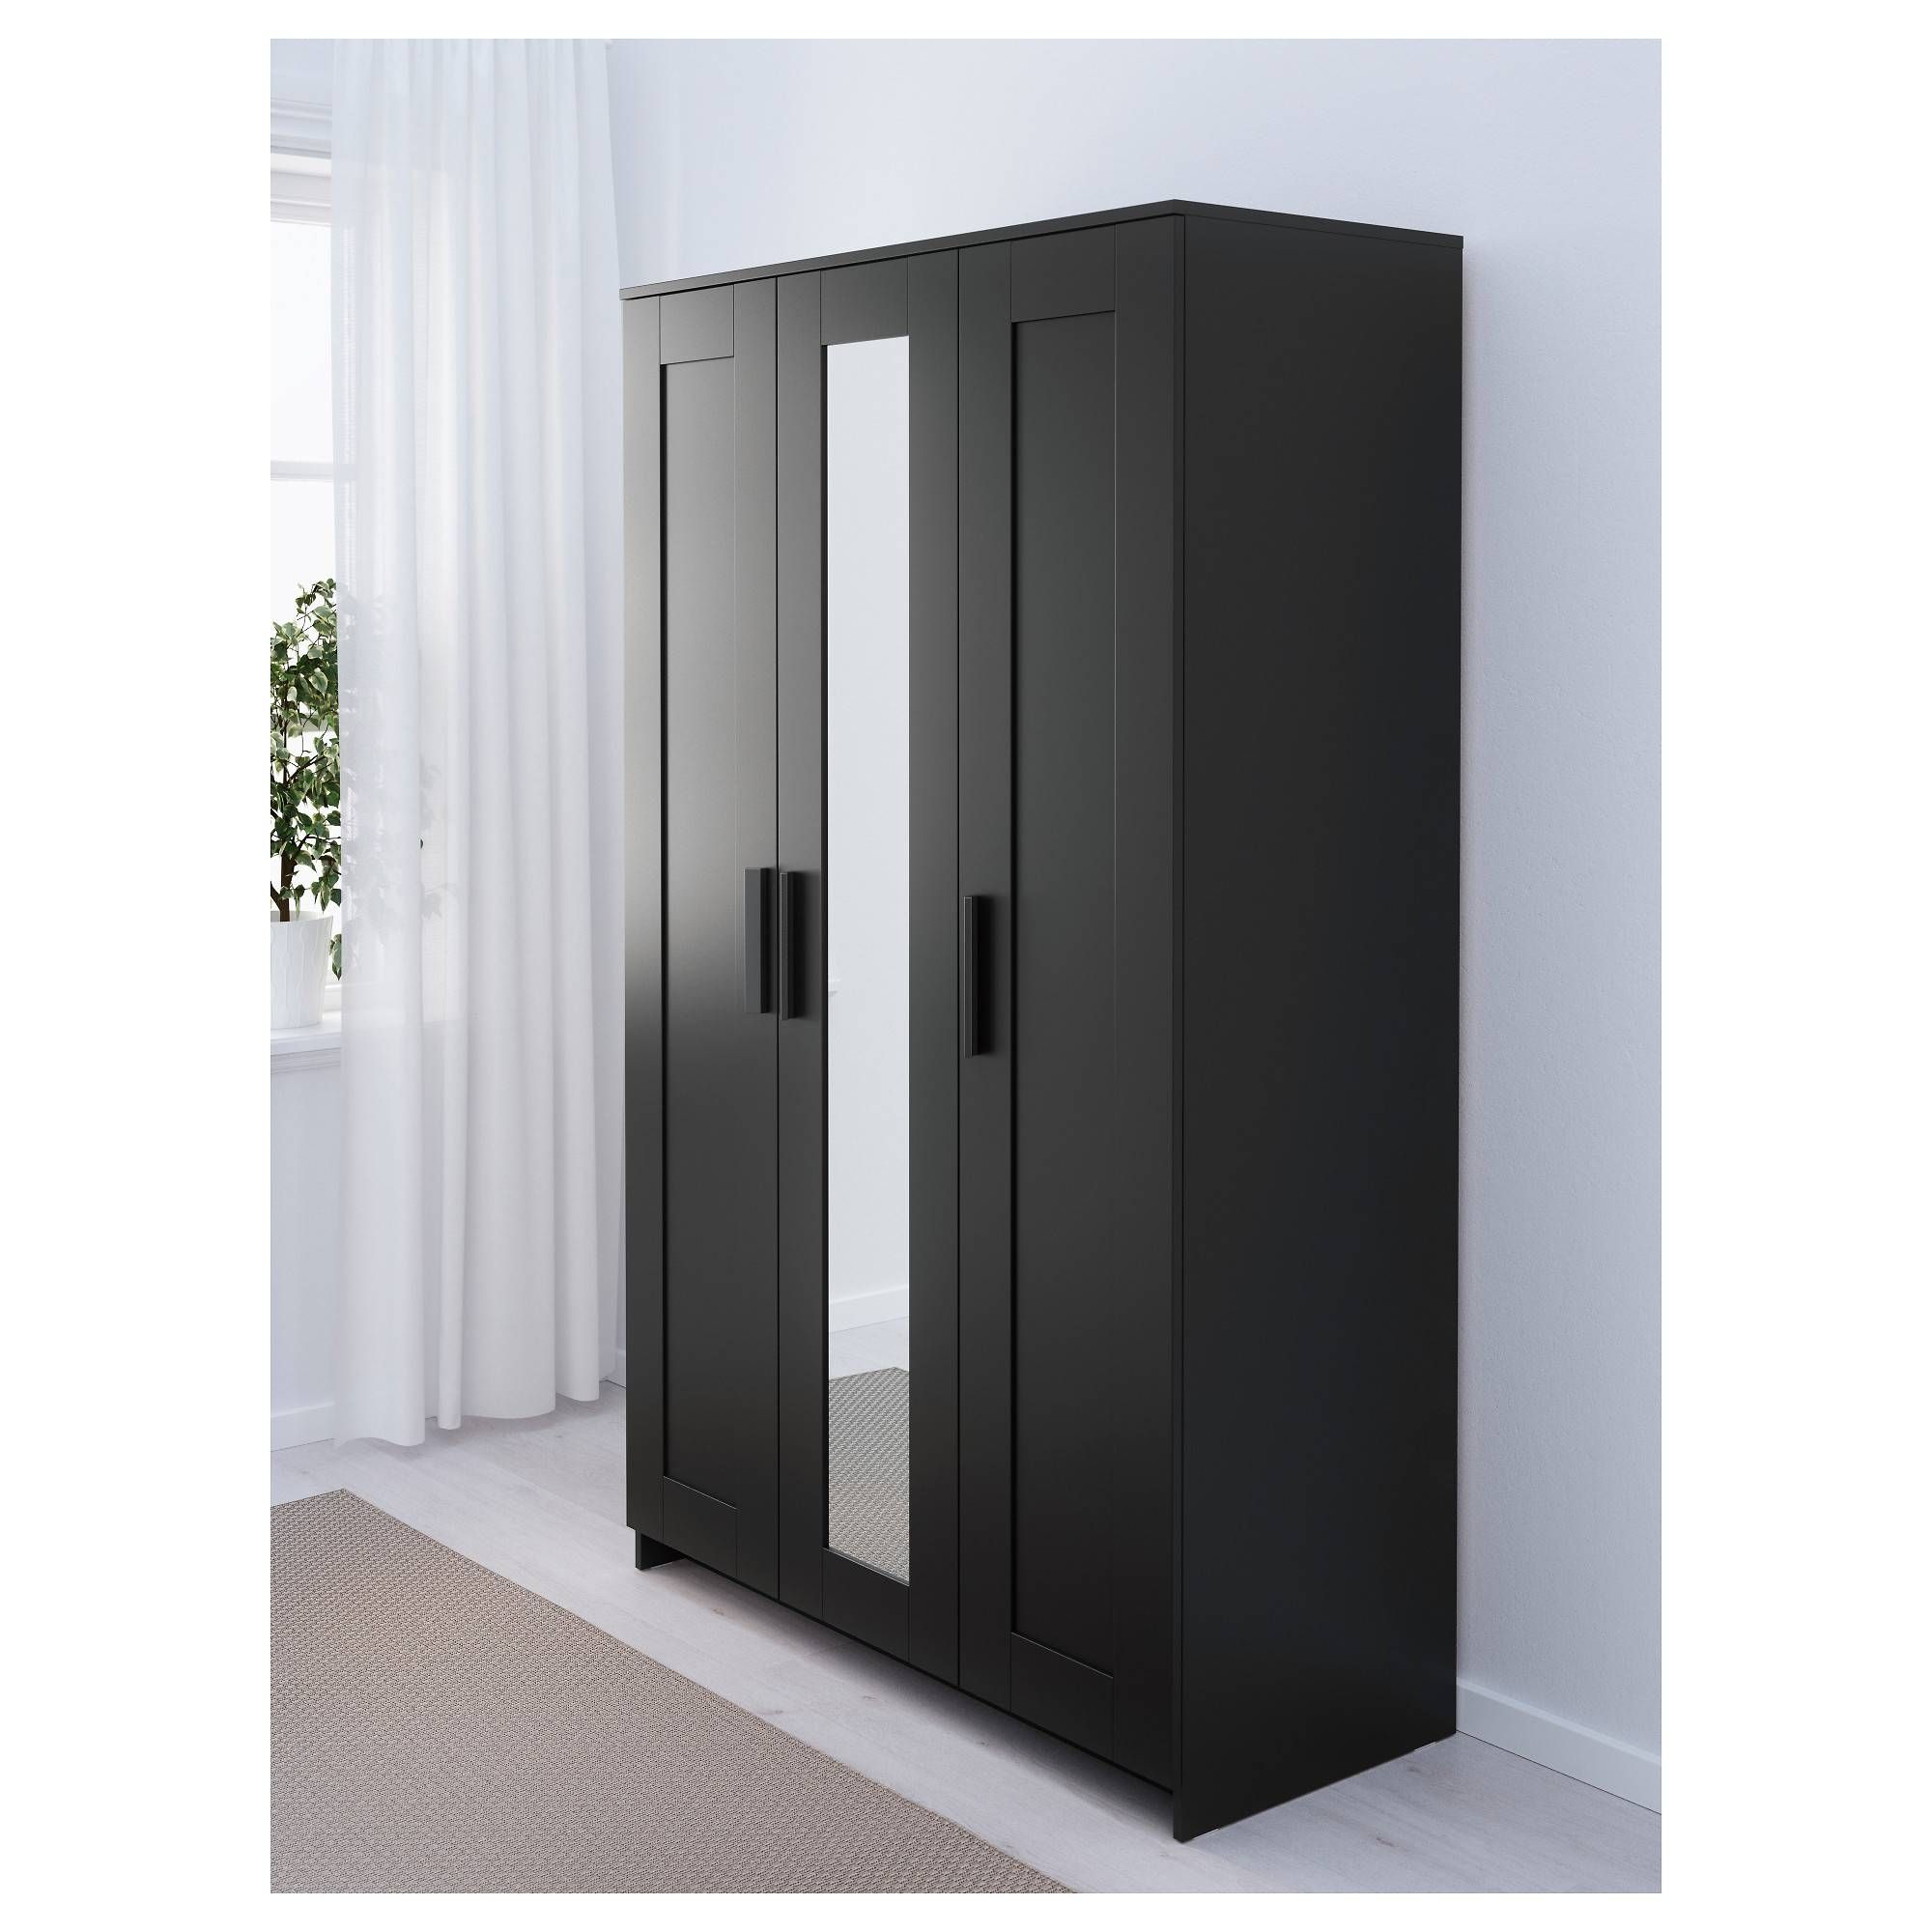 Brimnes Wardrobe With 3 Doors – White – Ikea In Three Door Wardrobes With Mirror (View 3 of 15)